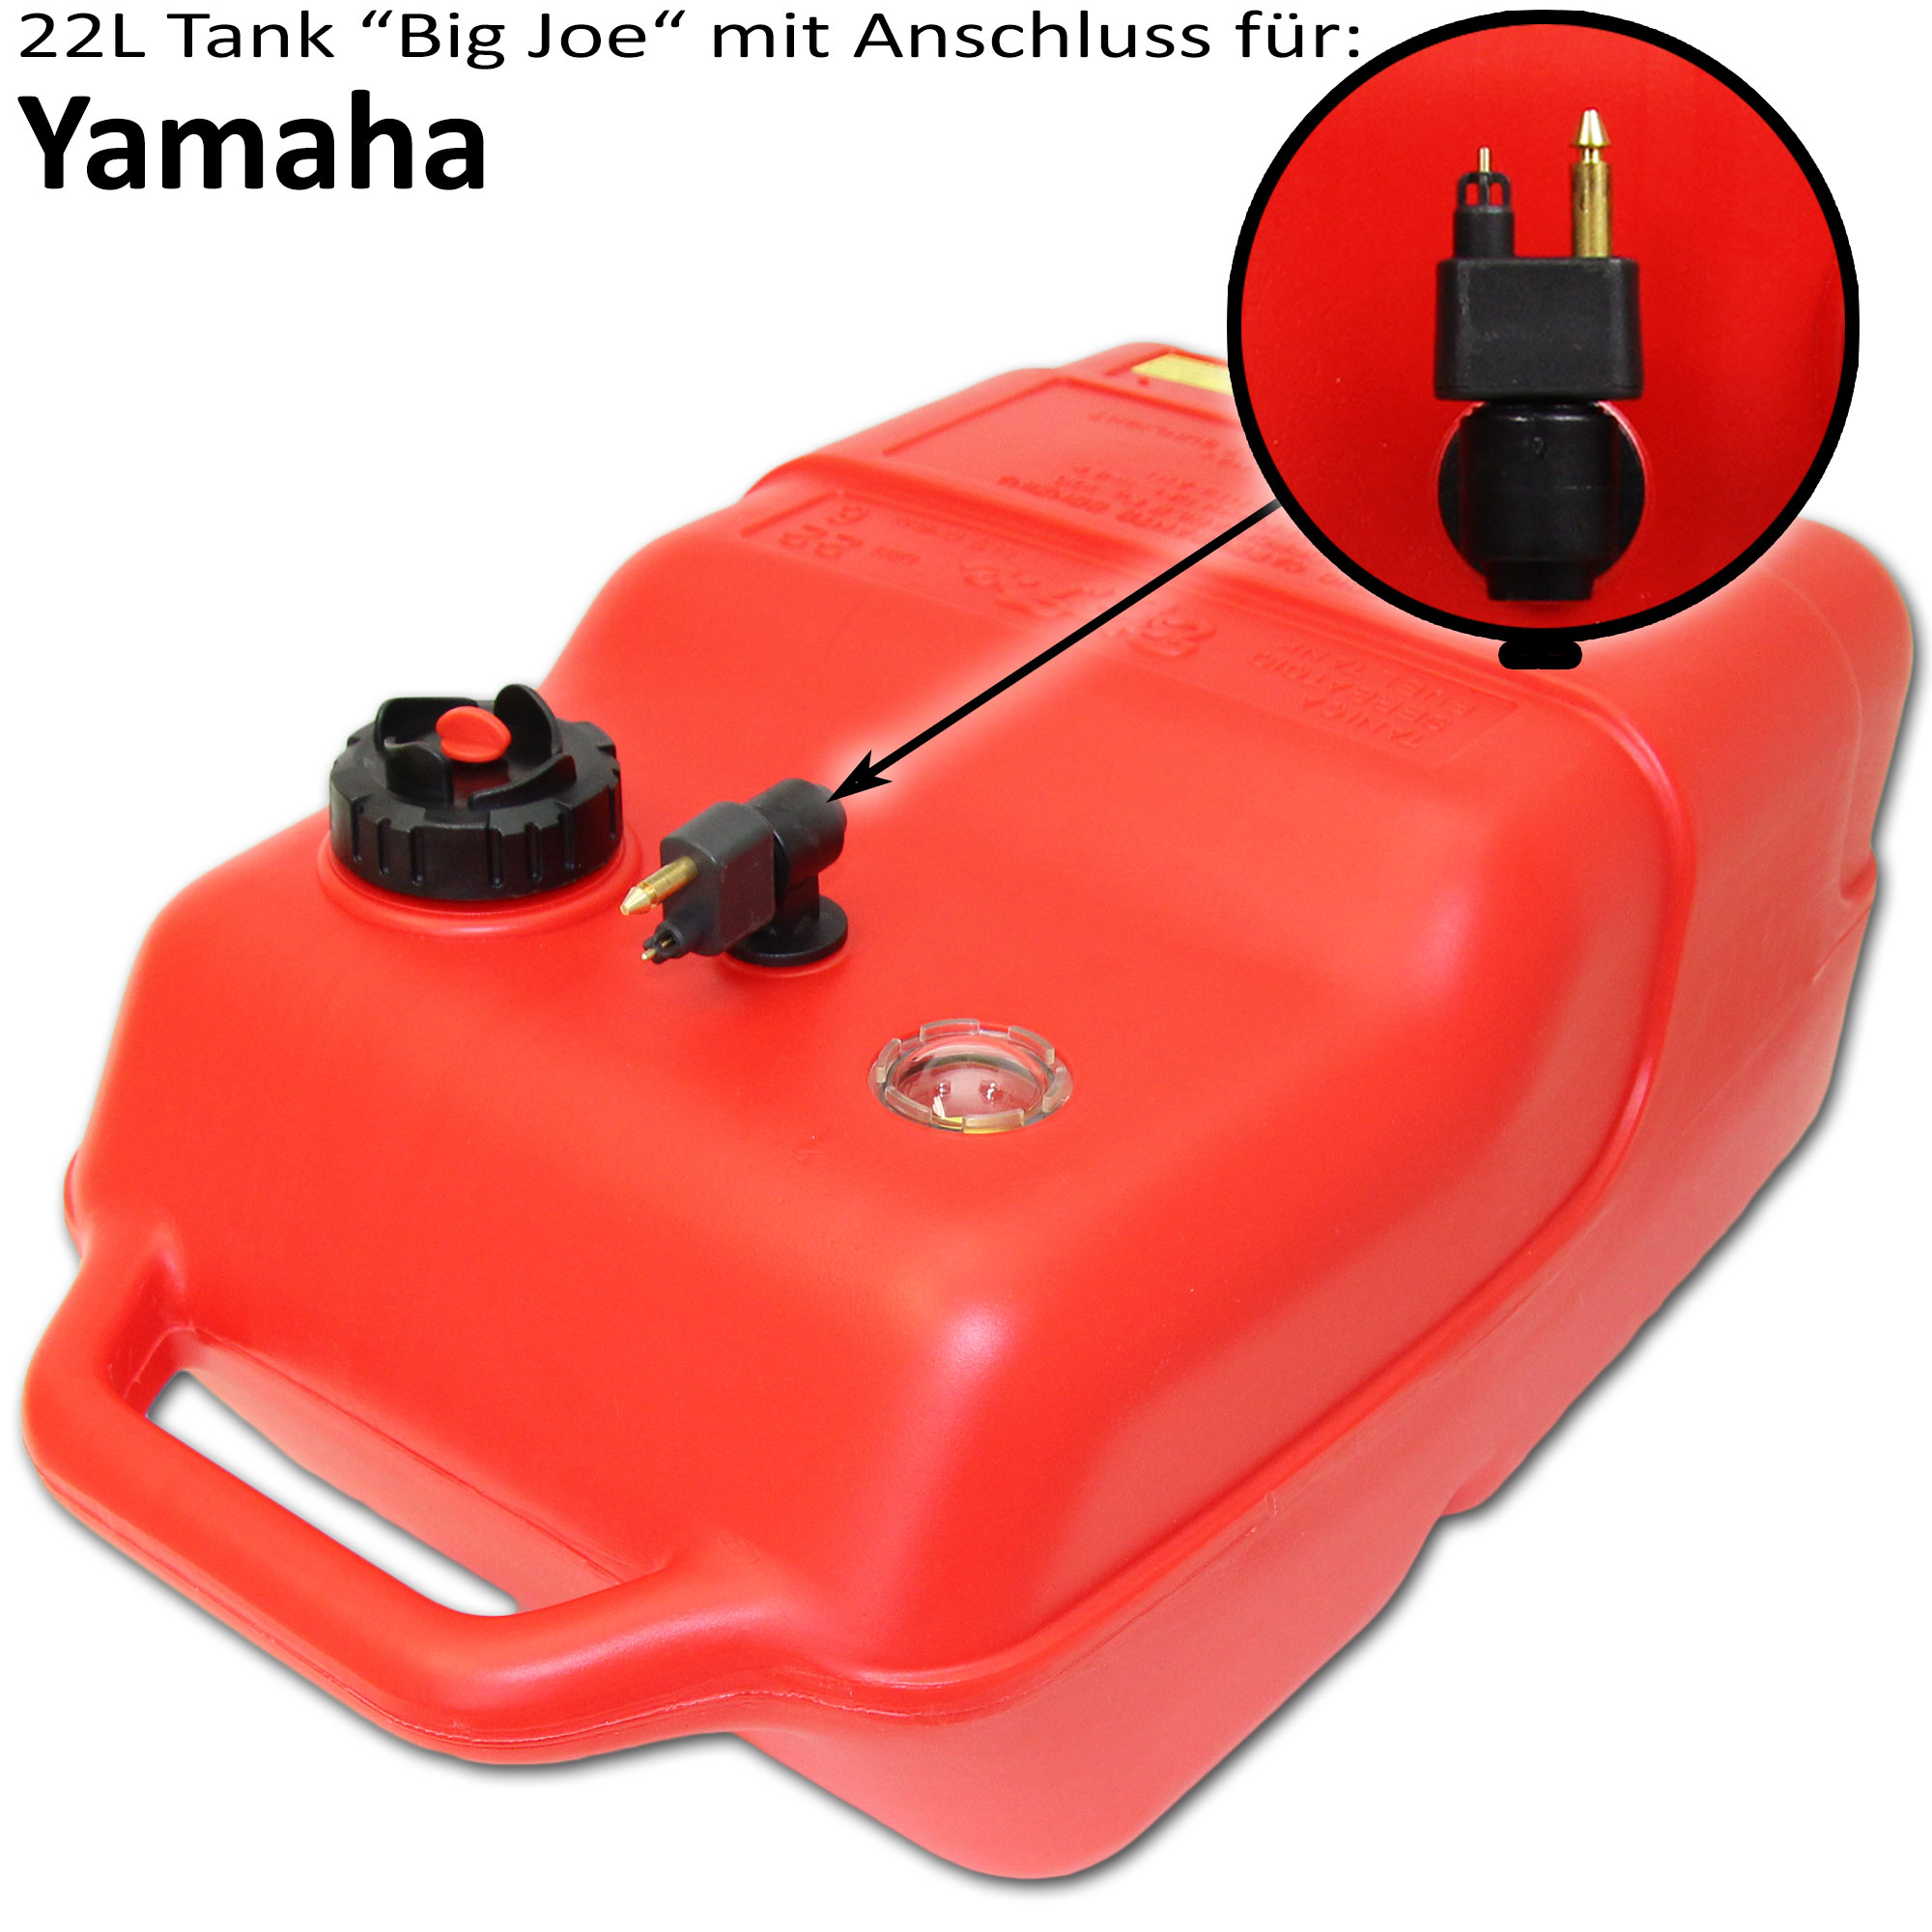 Kraftstofftank rot mit Yamaha Anschluss / Füllstandsanzeige manuell